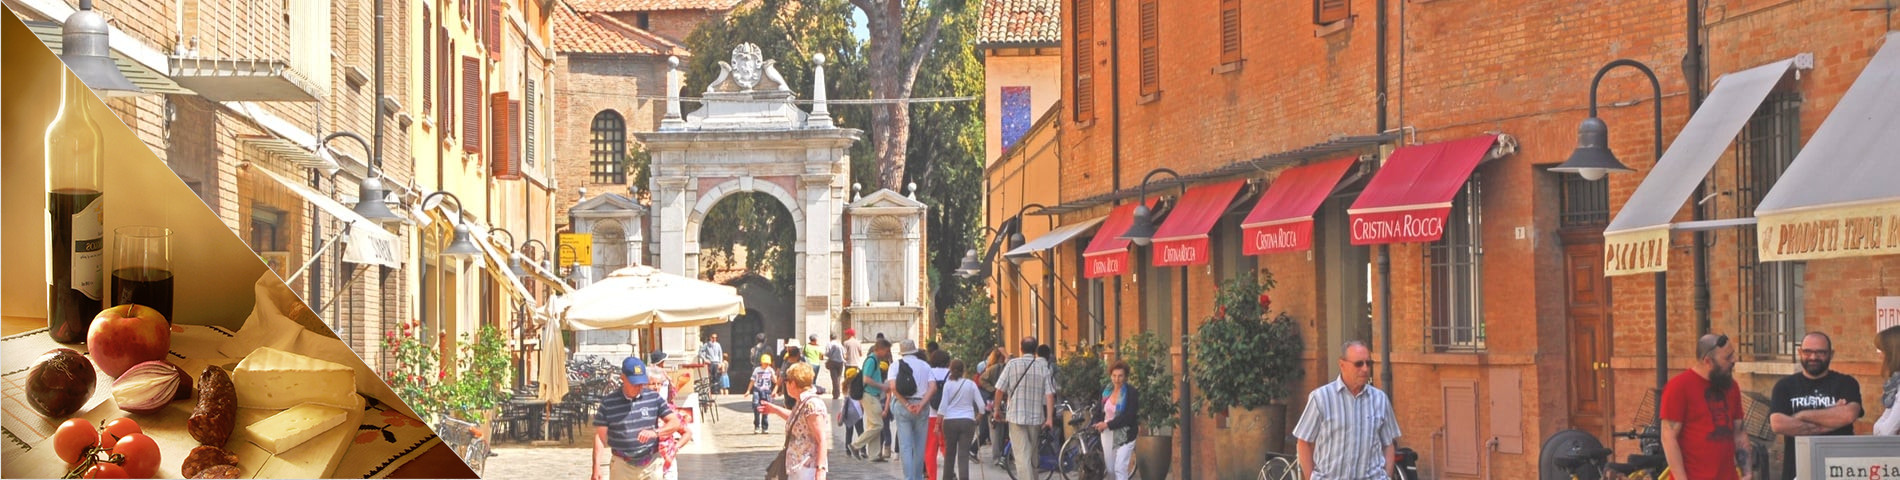 Ravenna - Italià i Cultura